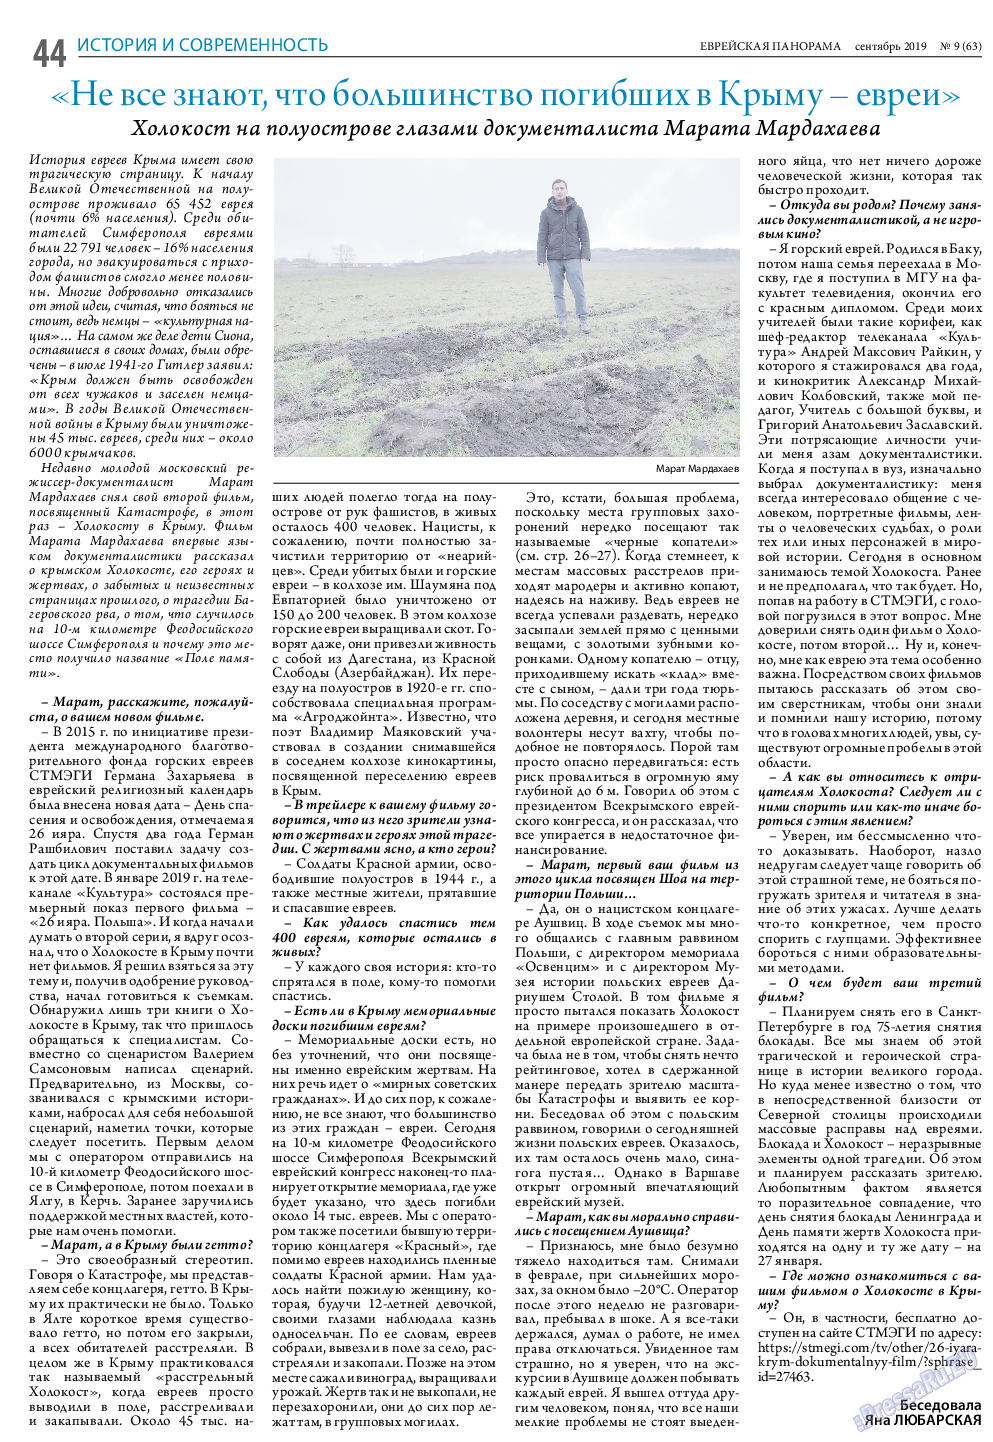 Еврейская панорама, газета. 2019 №9 стр.44